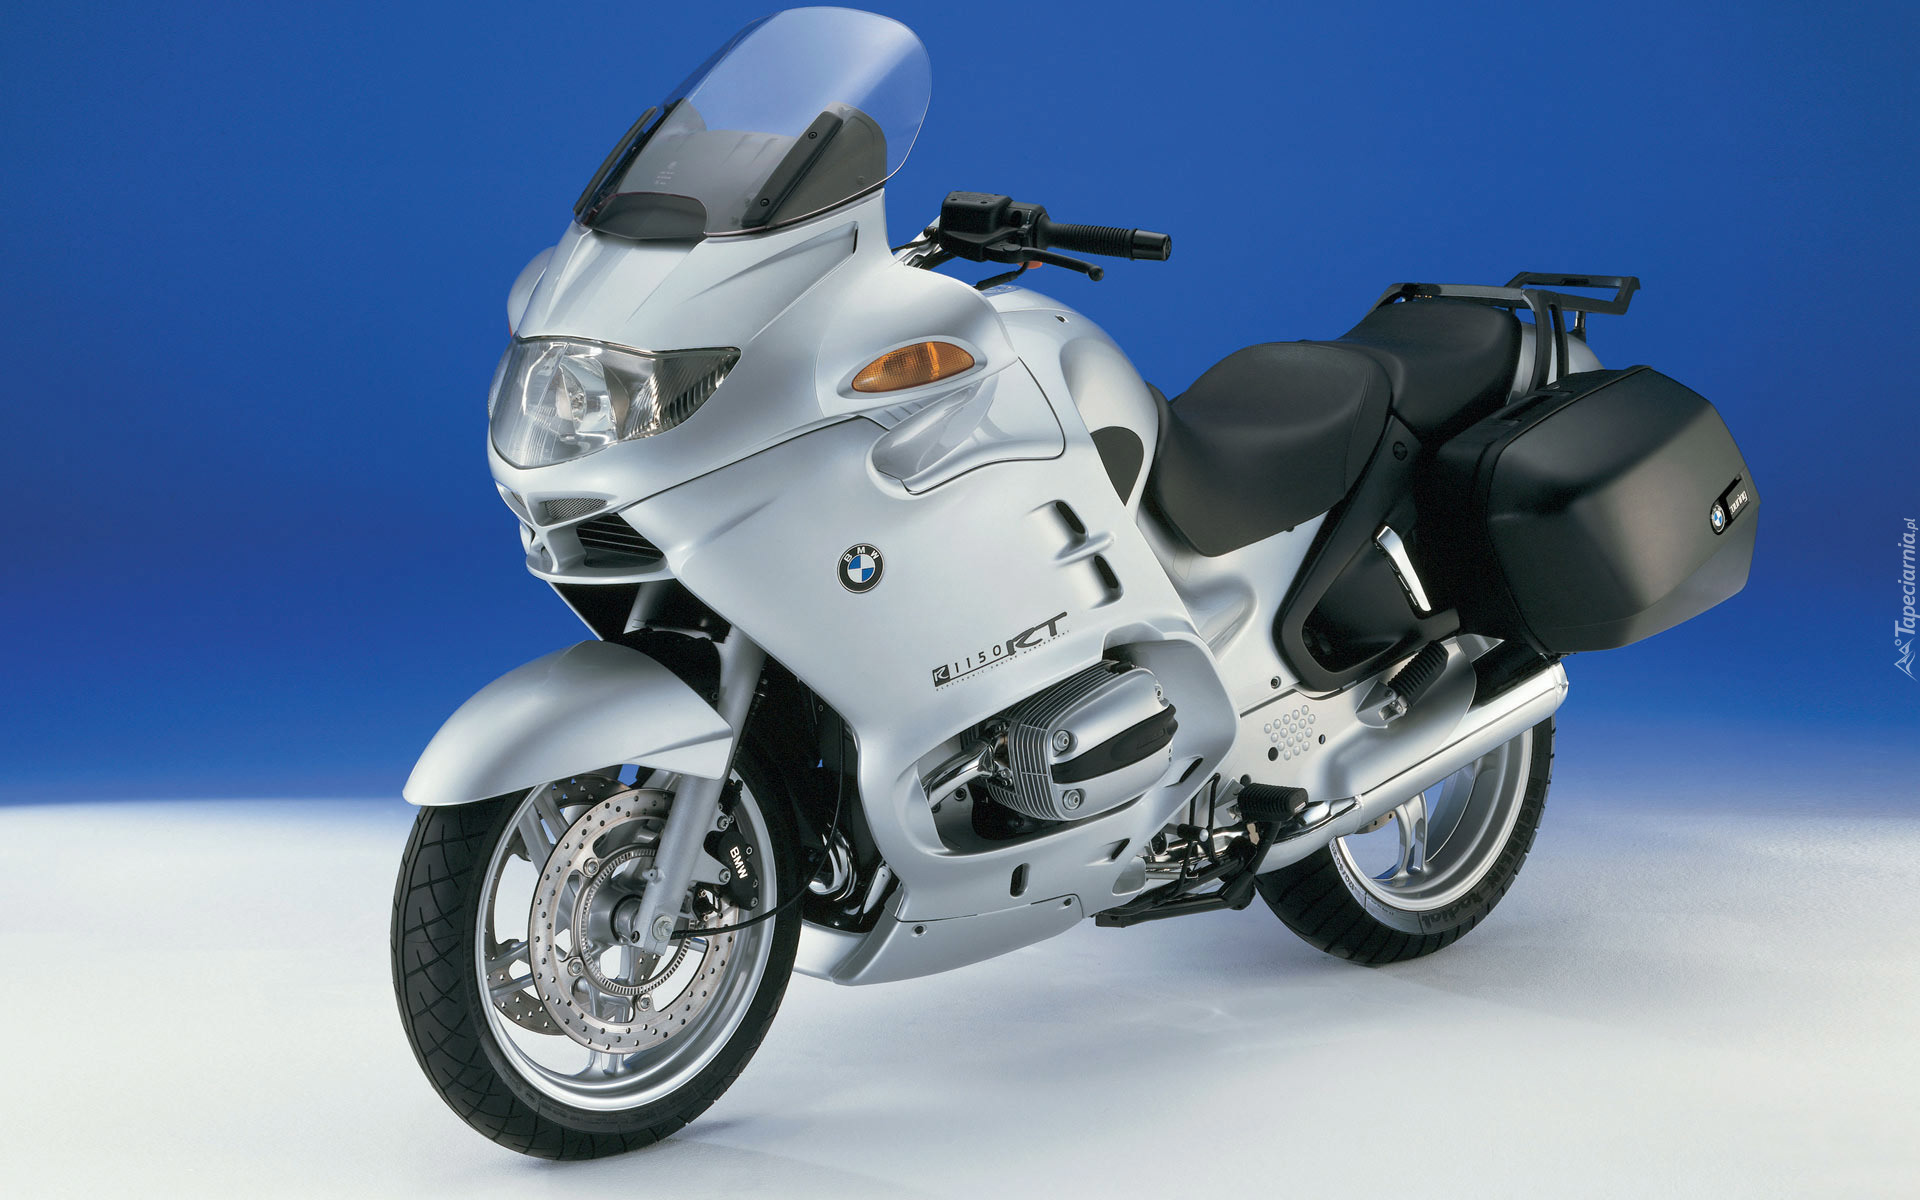 Motocykl, BMW R 1150 RT, 2001-2004